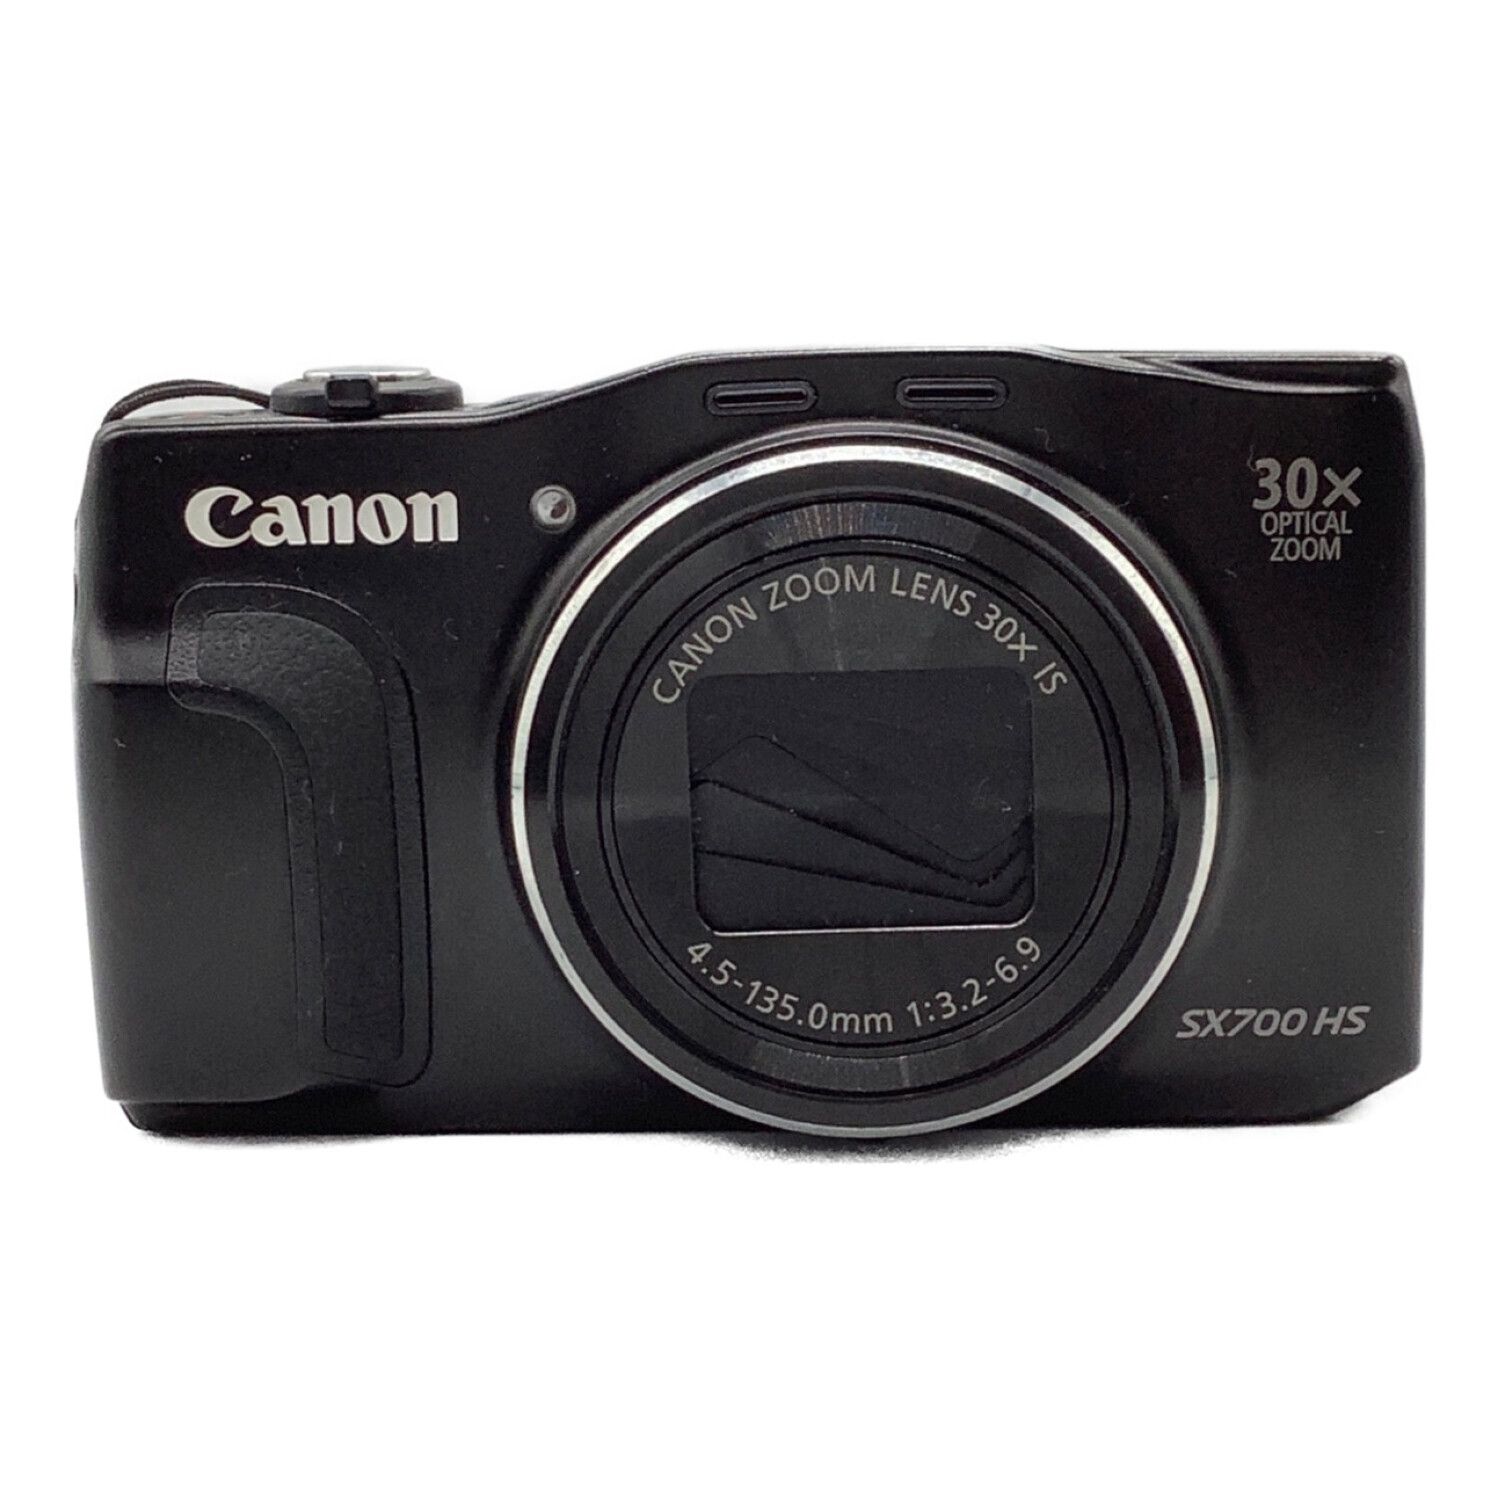 CANON (キャノン) コンパクトデジタルカメラ SX700 HS 1680万画素 1